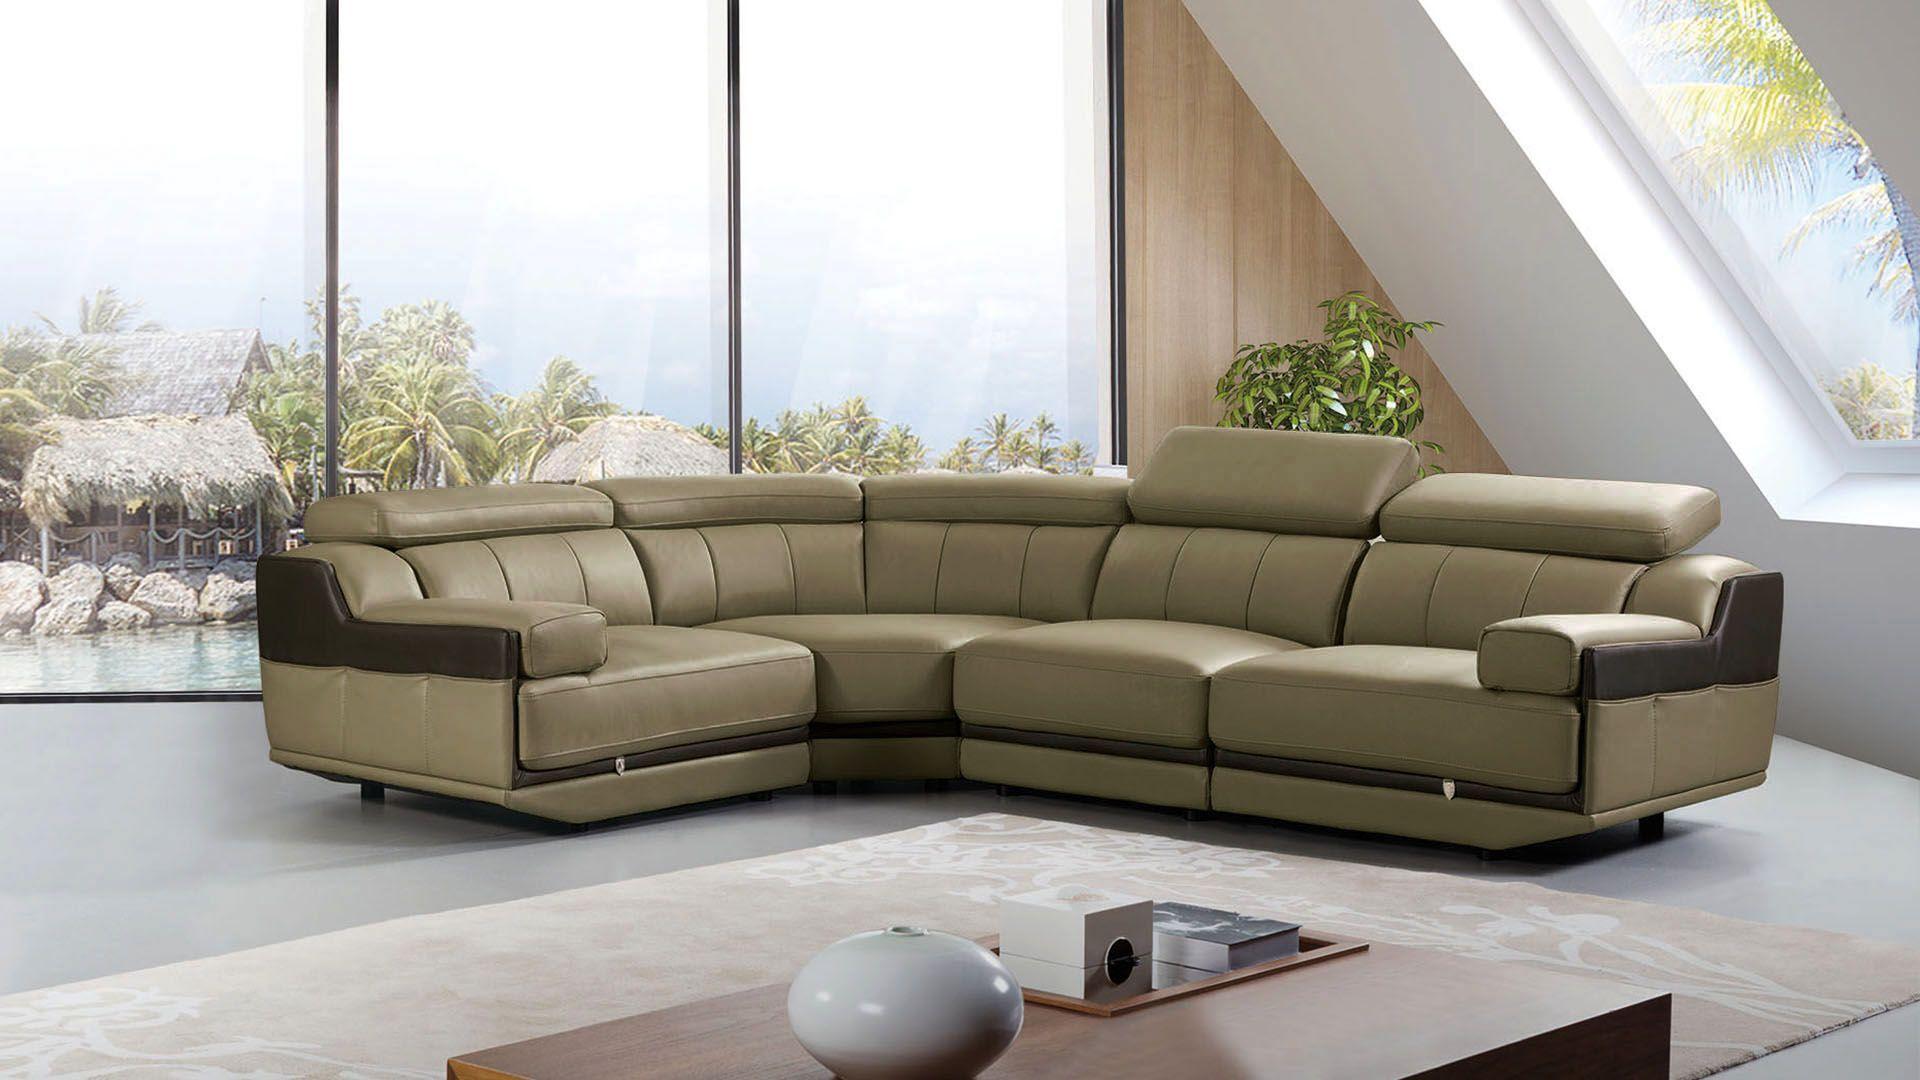 Contemporary, Modern Sectional Sofa EK-L047M-LG.TPE EK-L047M-LG.TPE in Olive, Gray Italian Leather